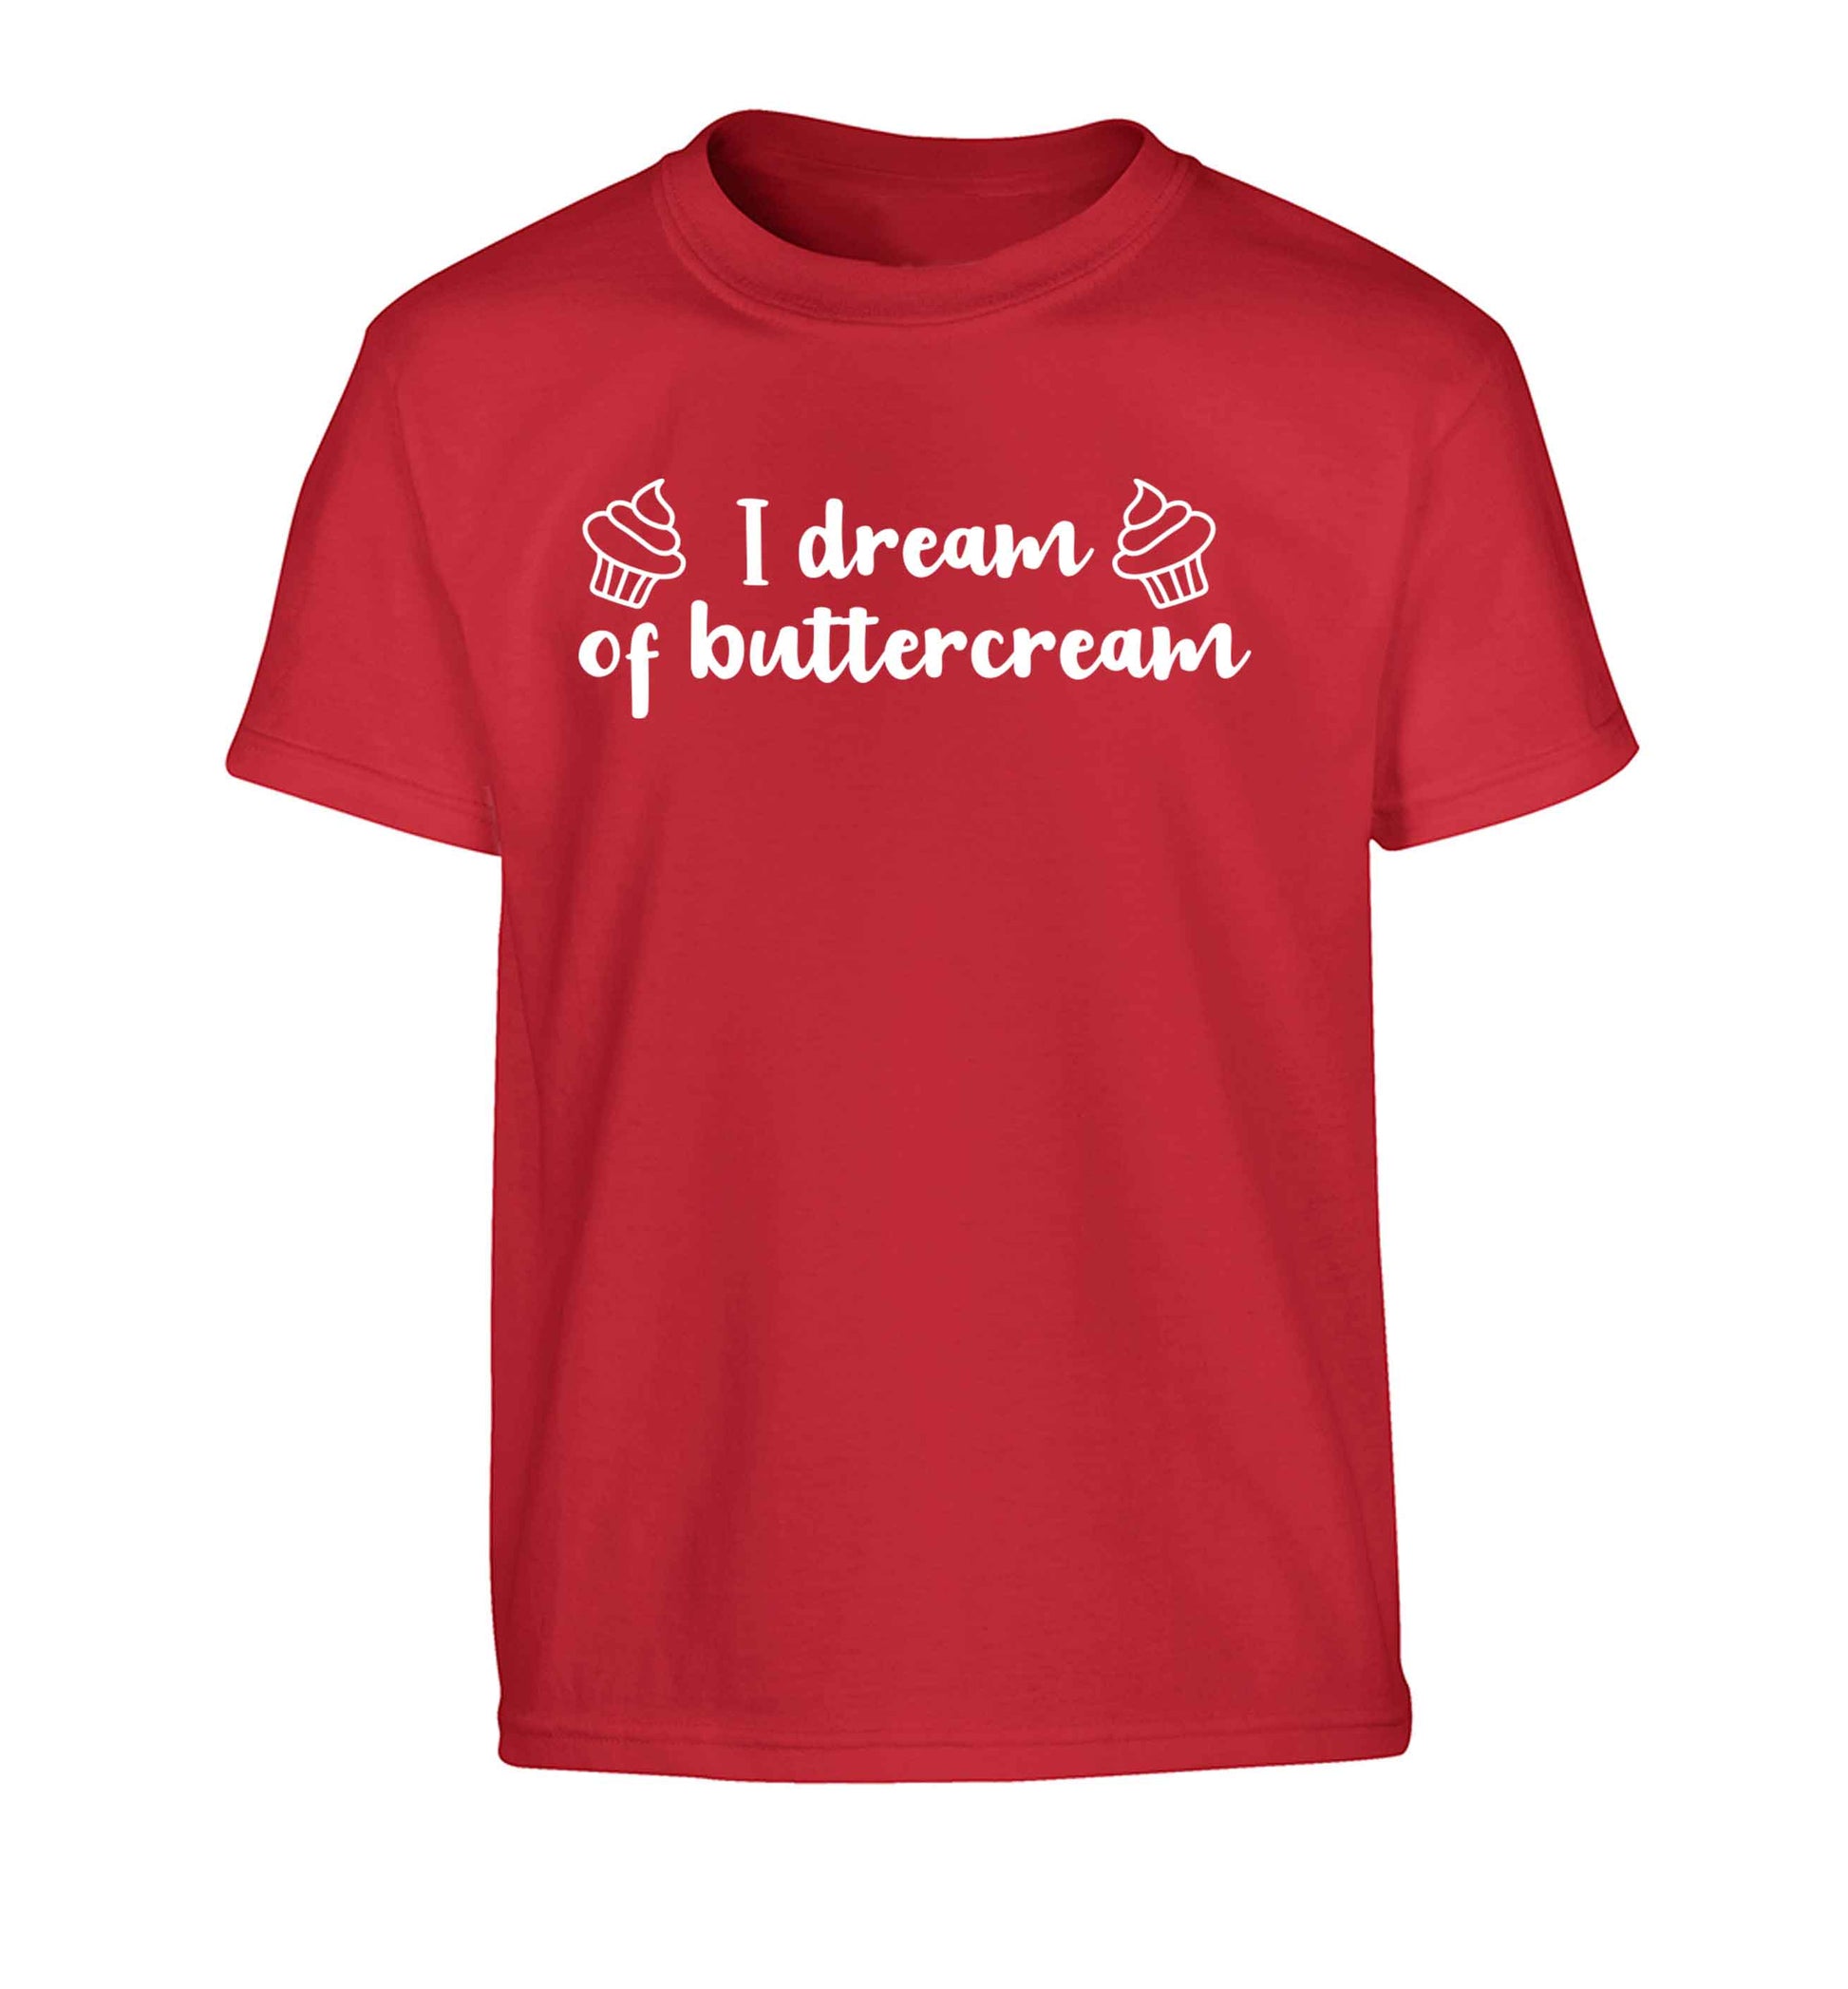 I dream of buttercream Children's red Tshirt 12-13 Years